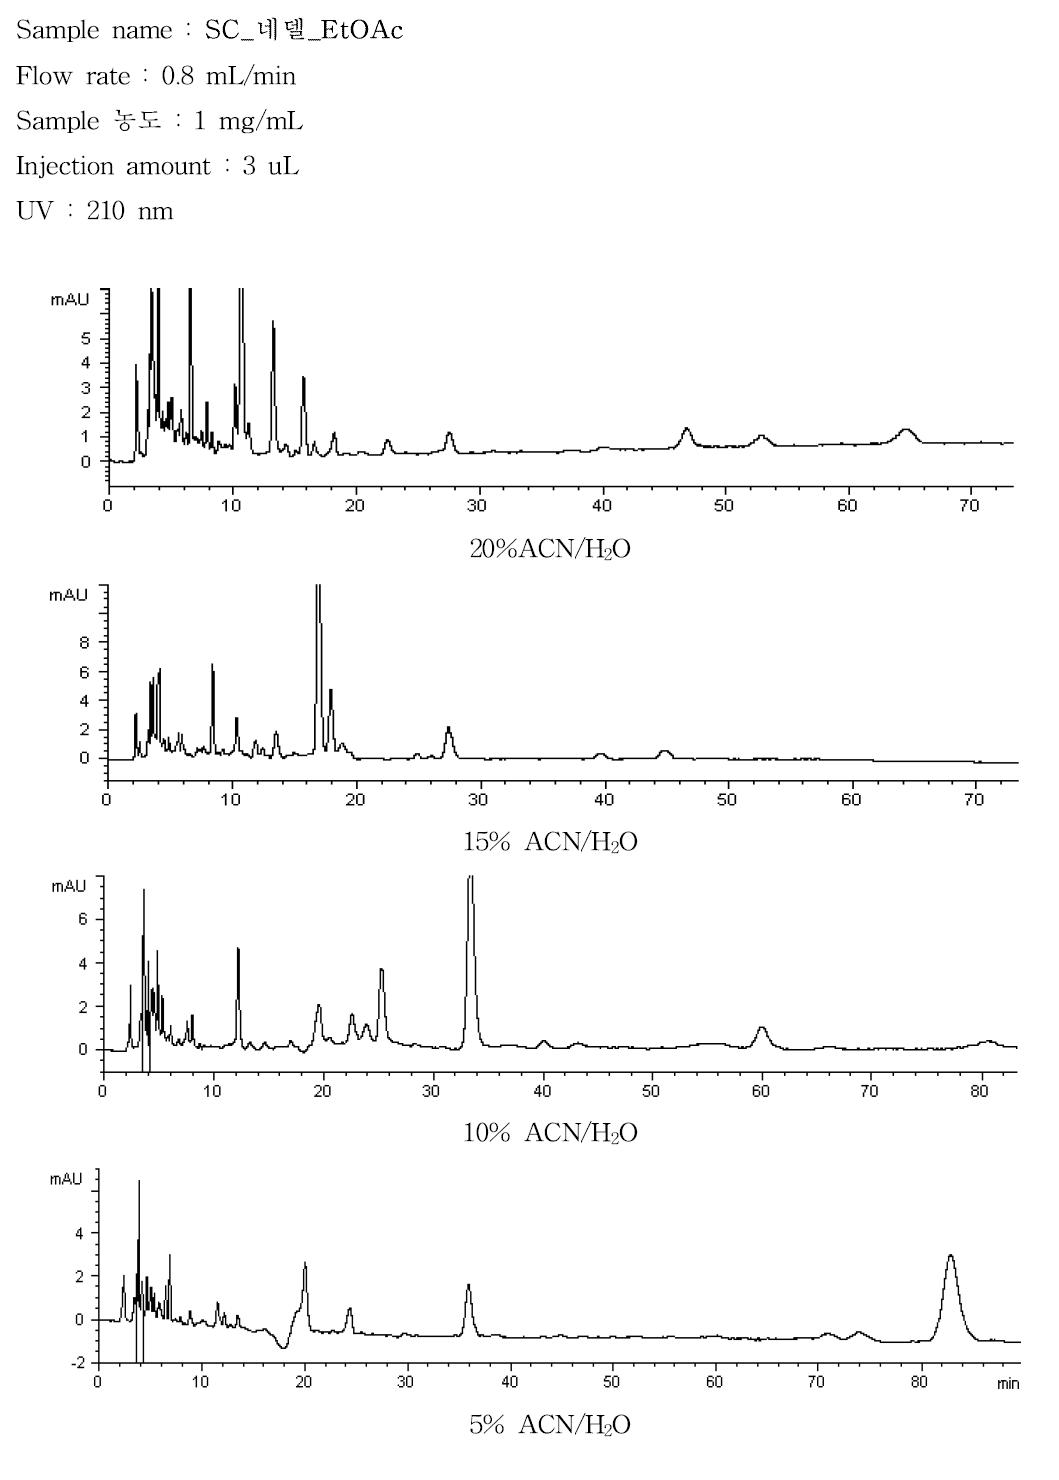 HPLC chromatograms of SC_네델_EtOAc with ACN/H2O mobile phase.